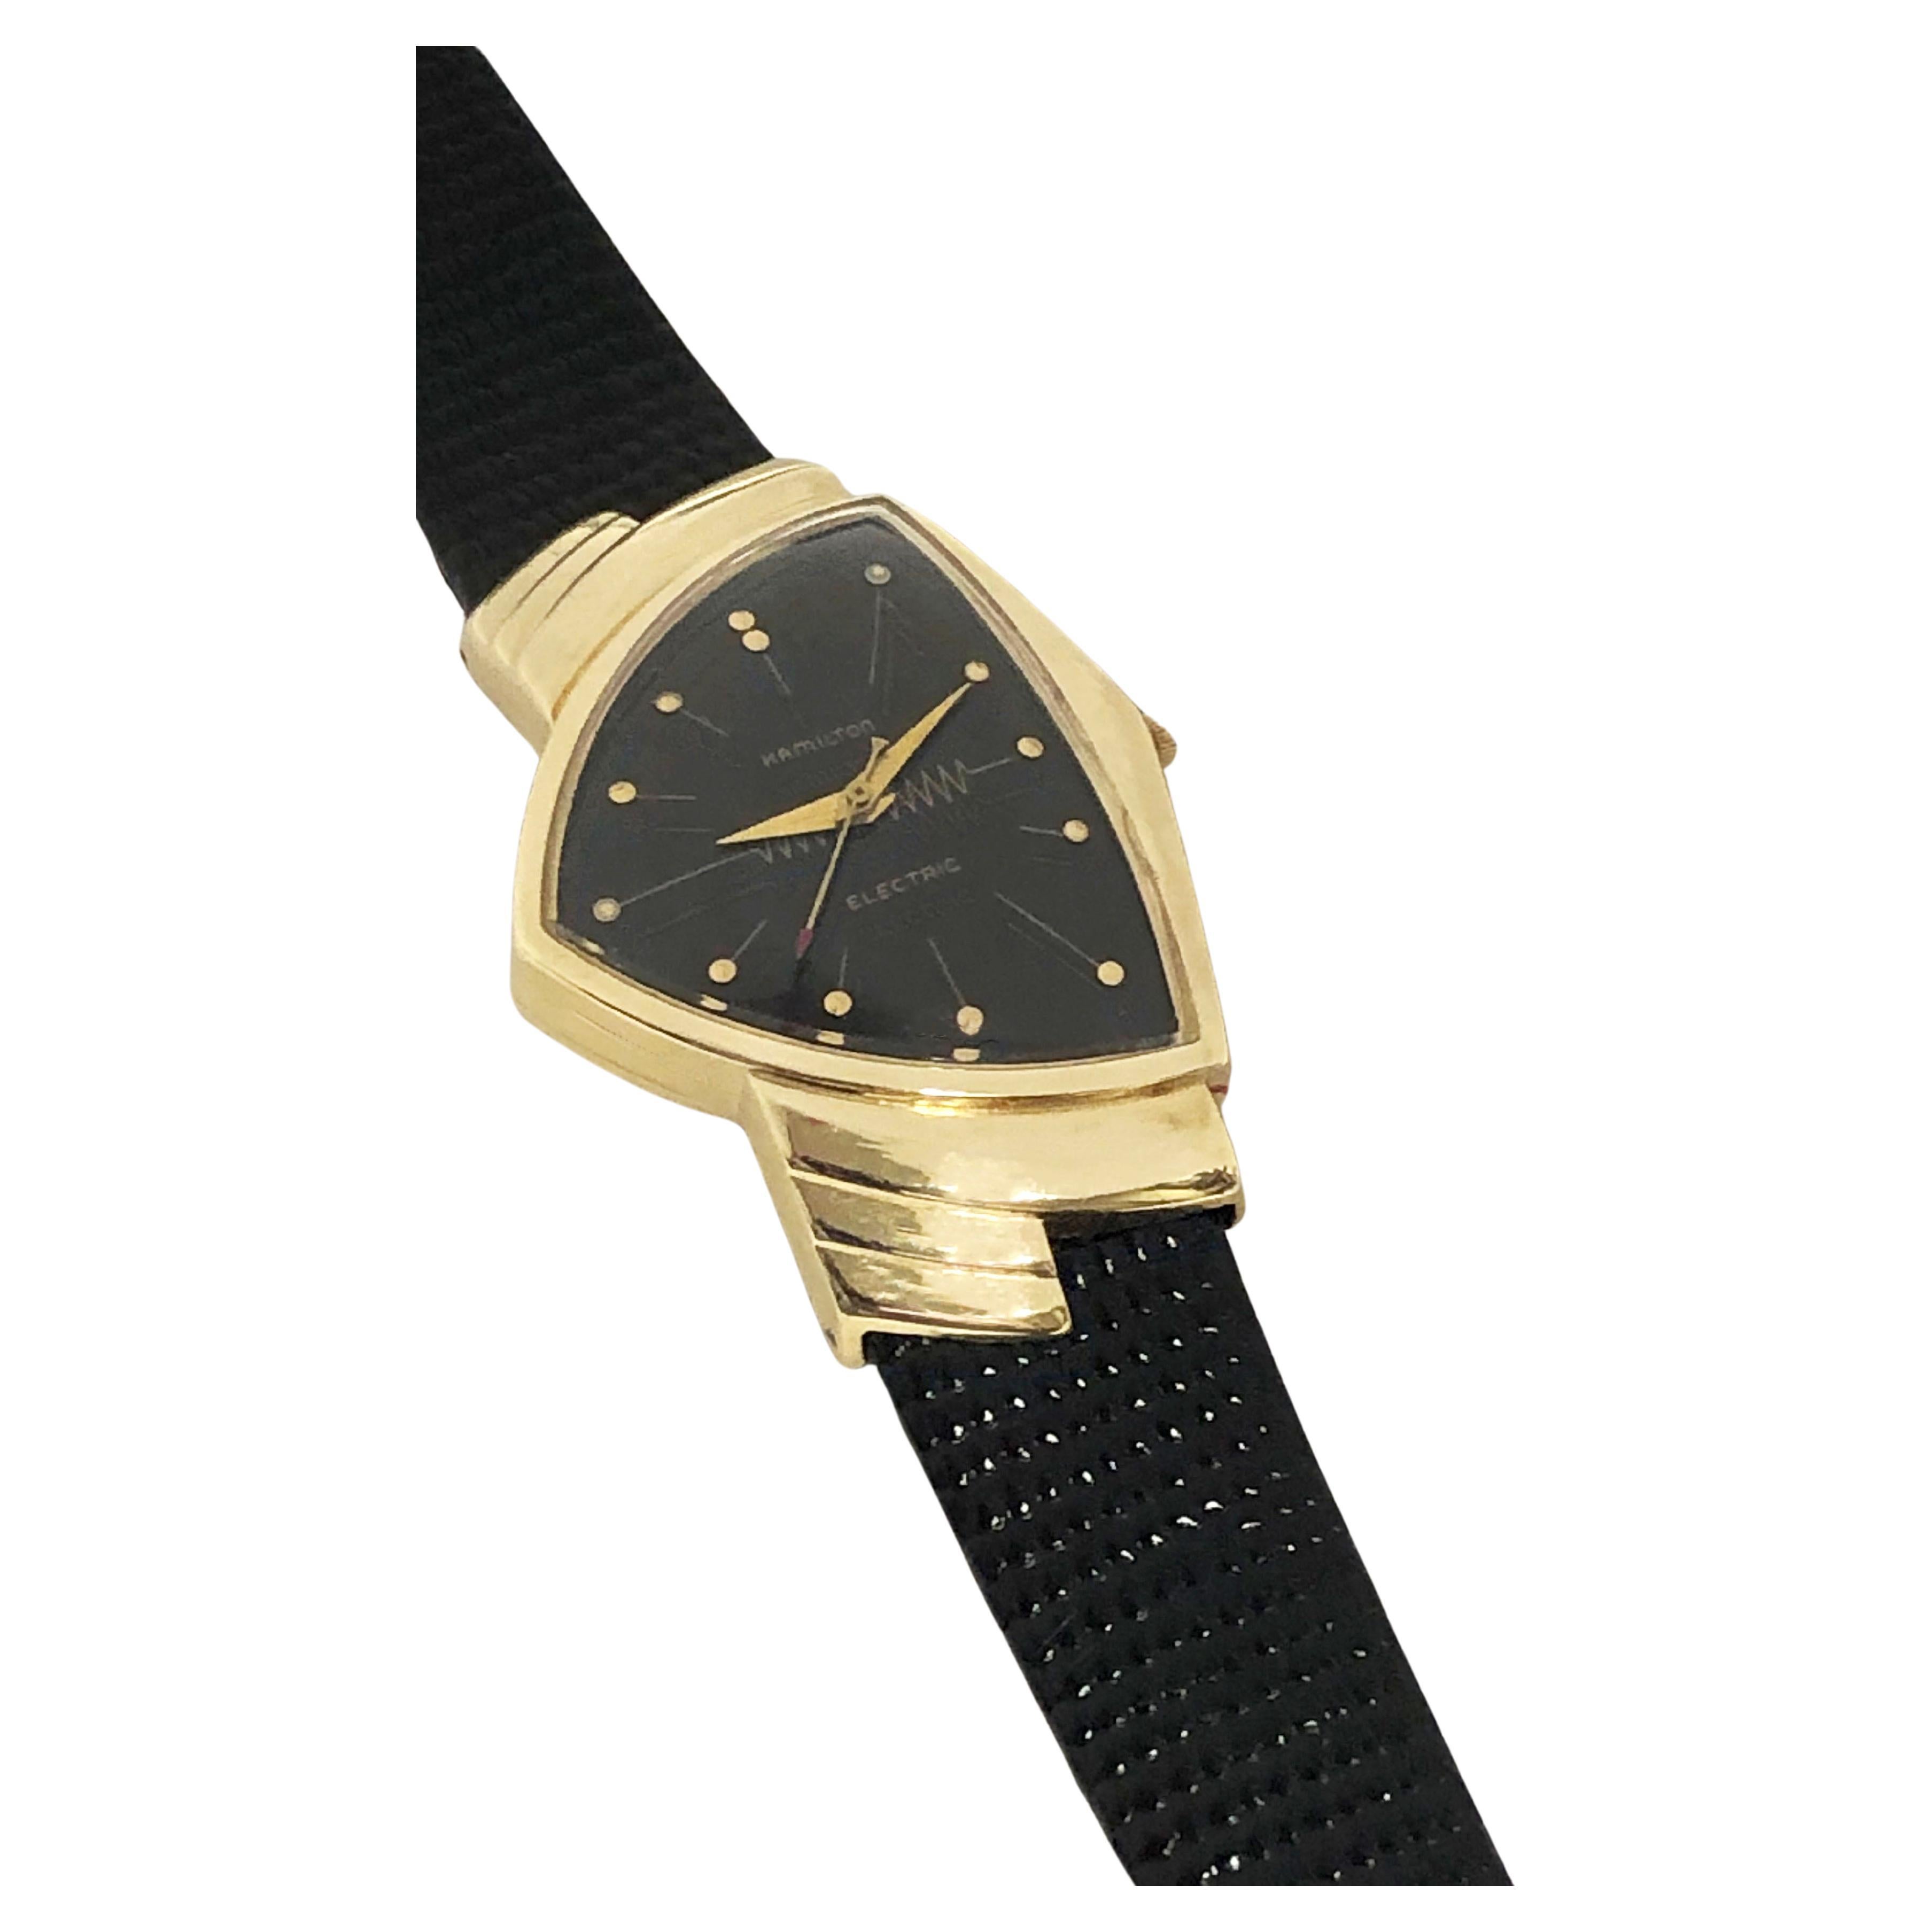 Hamilton 1960 14k Yellow Gold "Ventura" Wrist watch